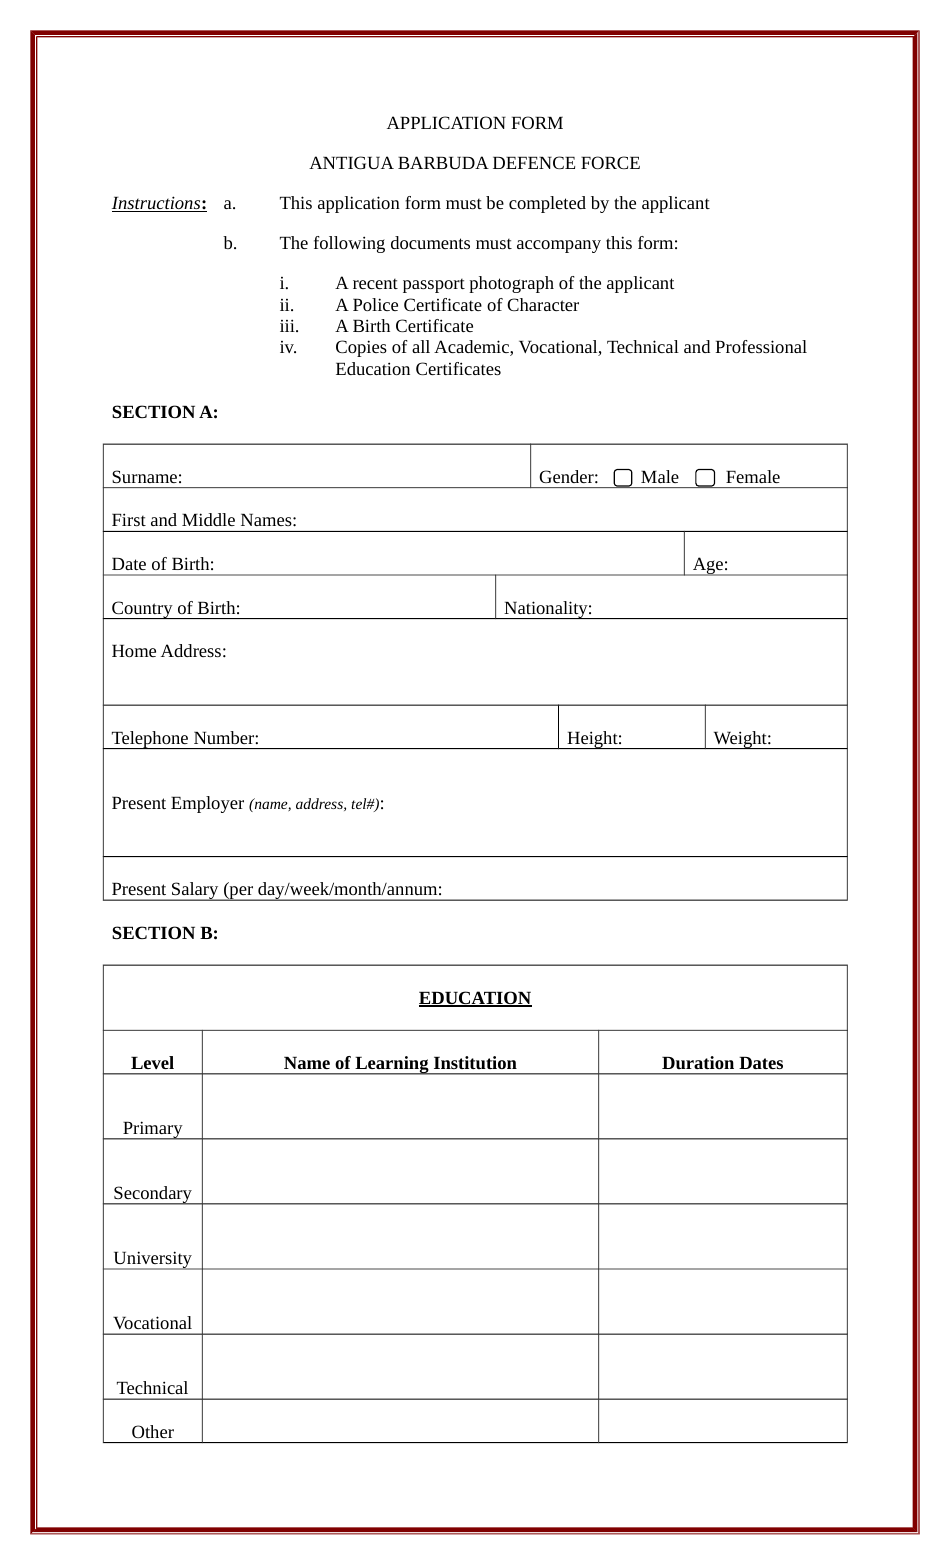 Application Form - Antigua and Barbuda, Page 1